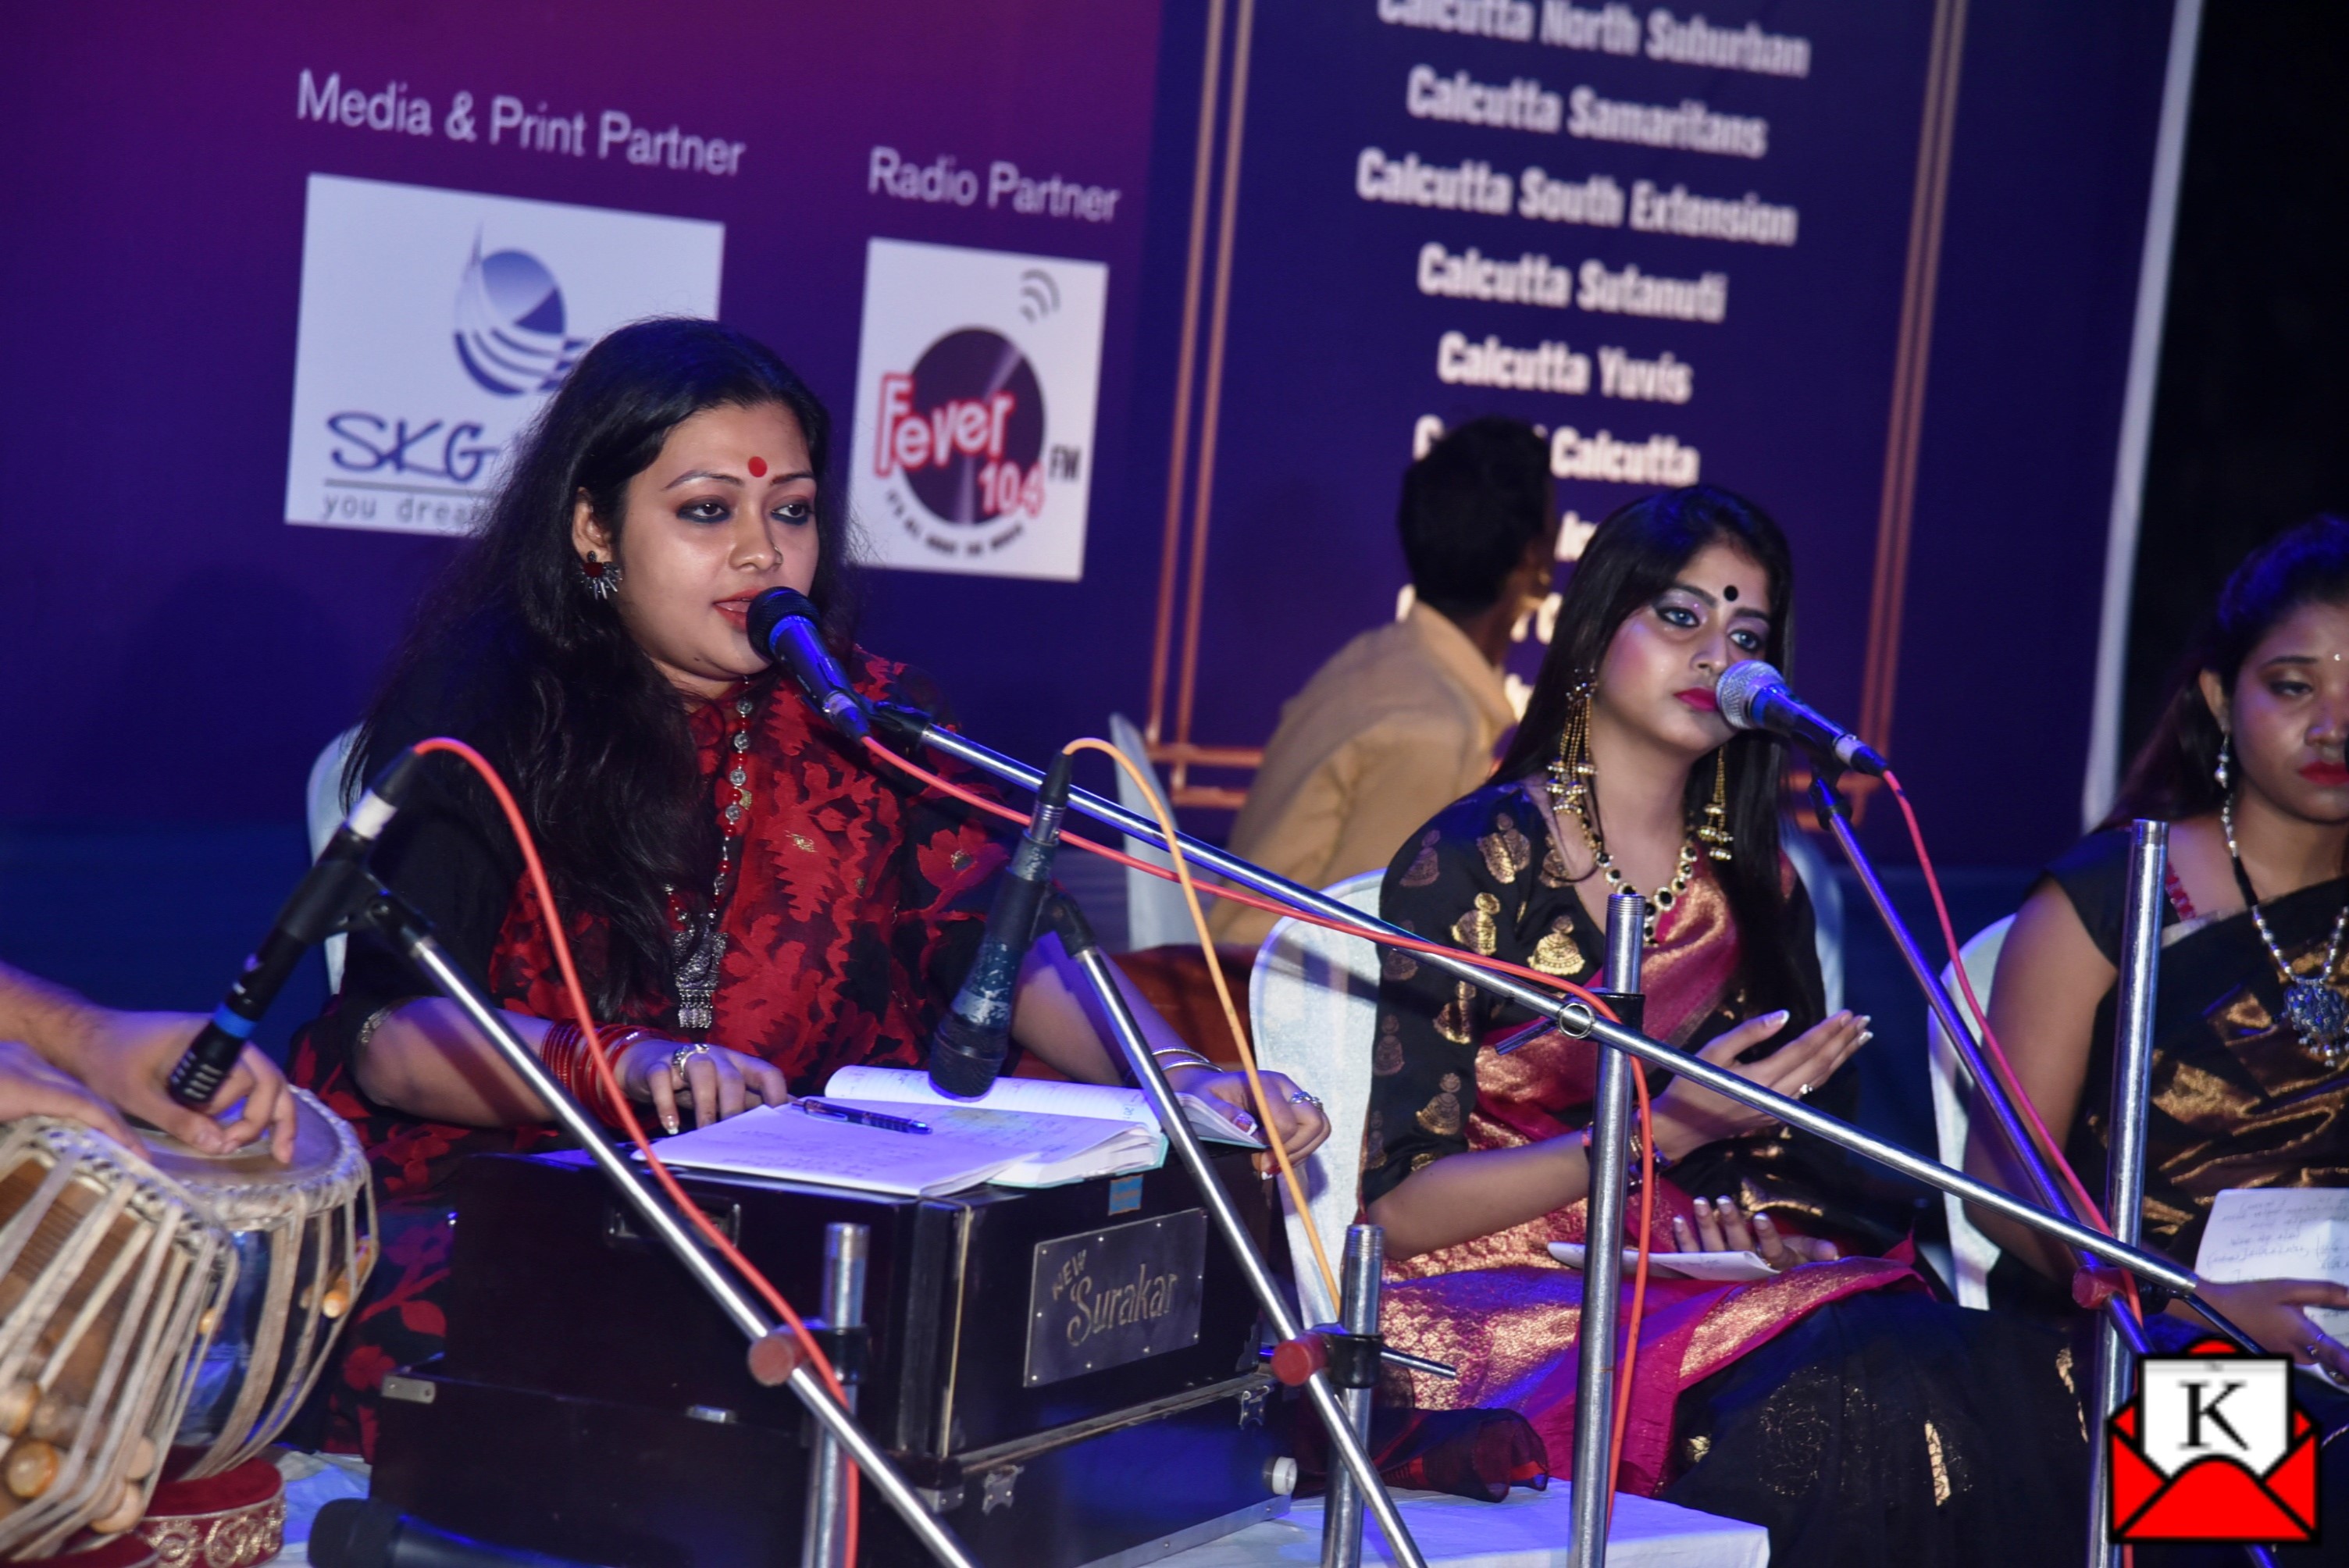 Rotary Club’s of Calcutta Labanhrad and Victoria Organized Enchanting Musical Evening